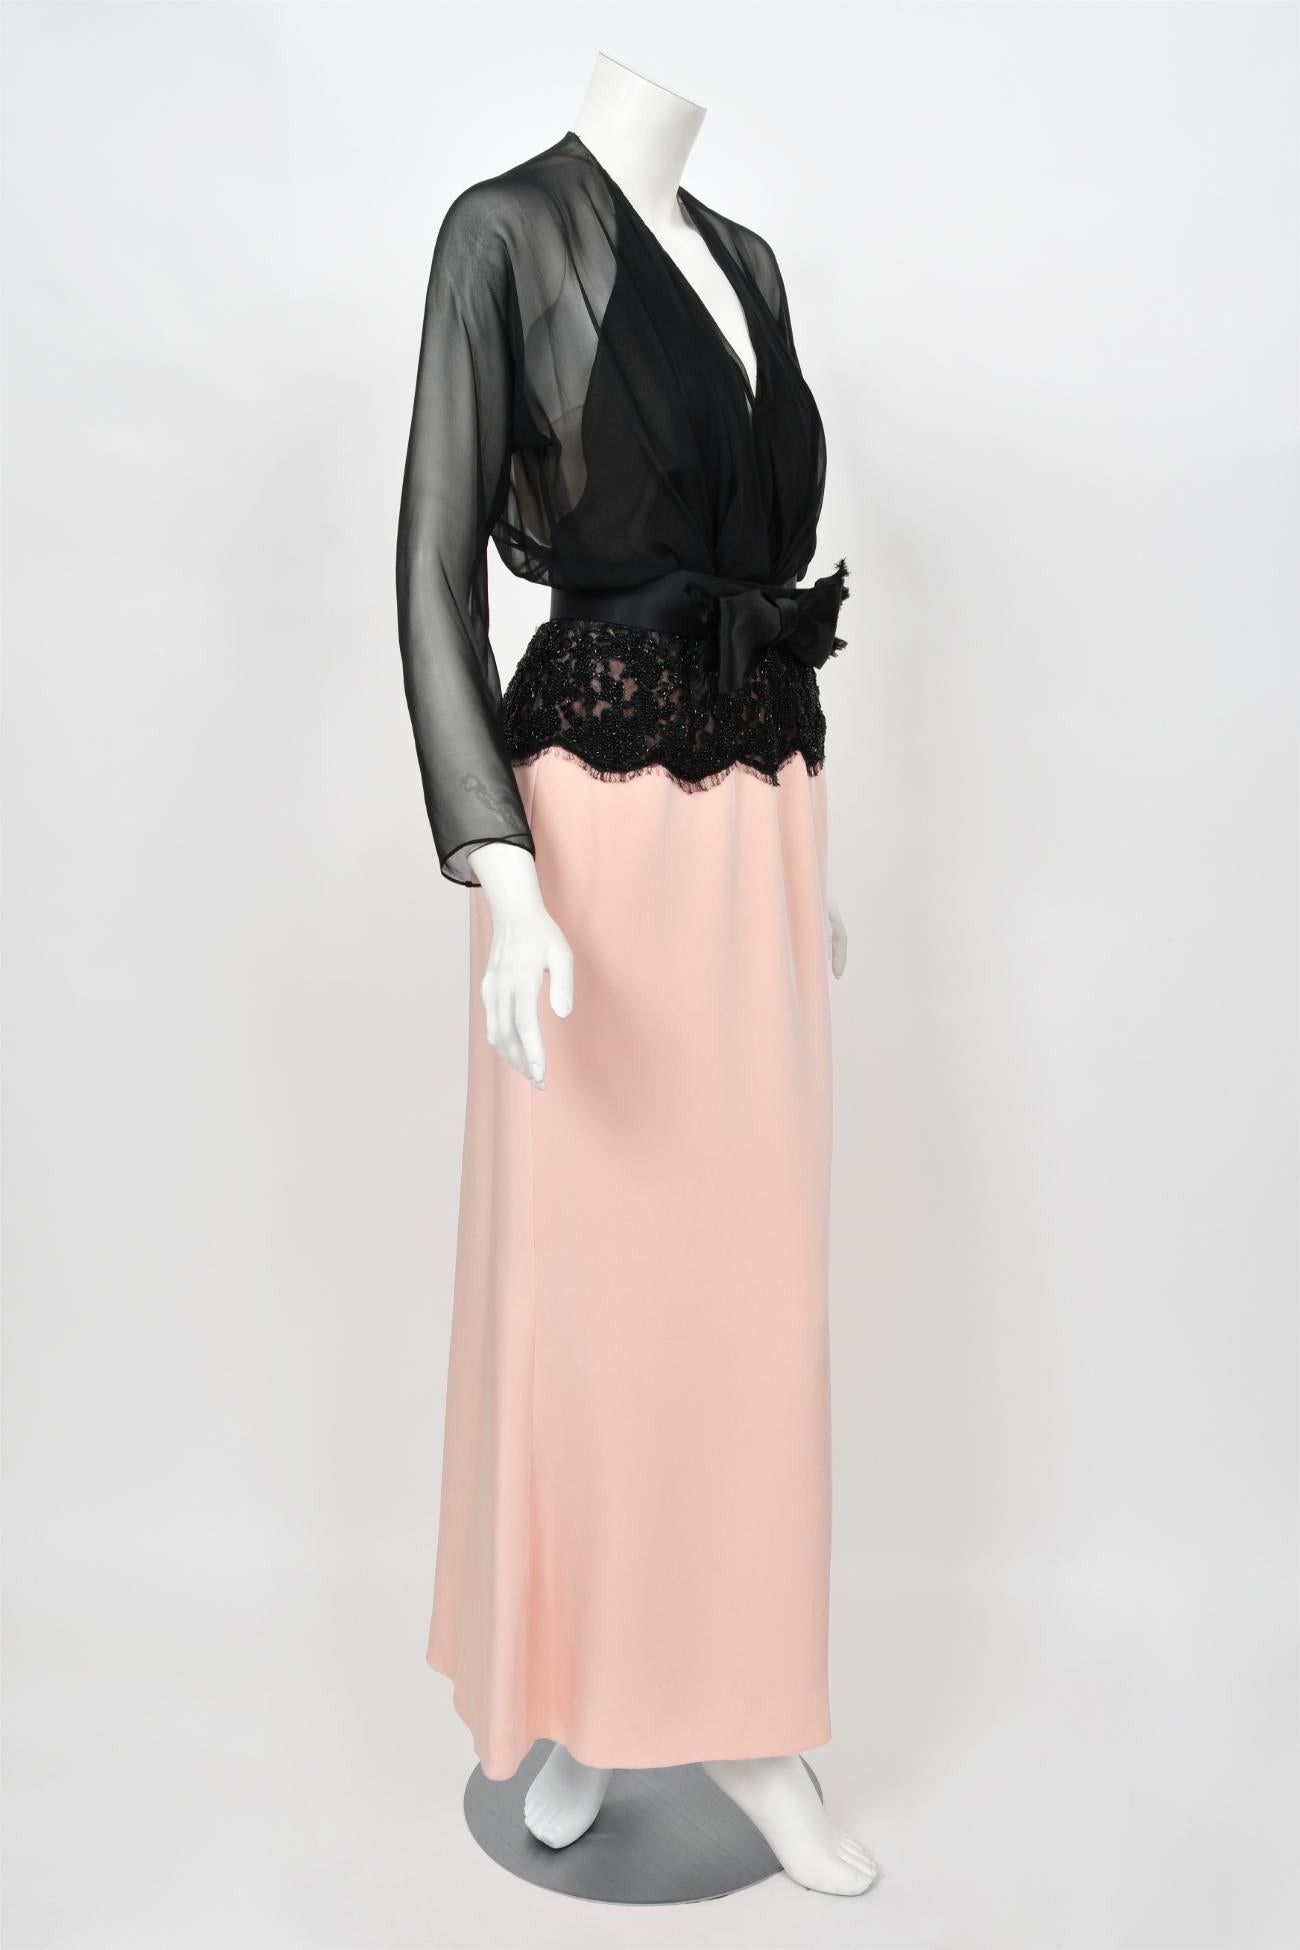 1986 Oscar de la Renta Documented Runway Black Sheer Chiffon & Pink Silk Gown For Sale 5